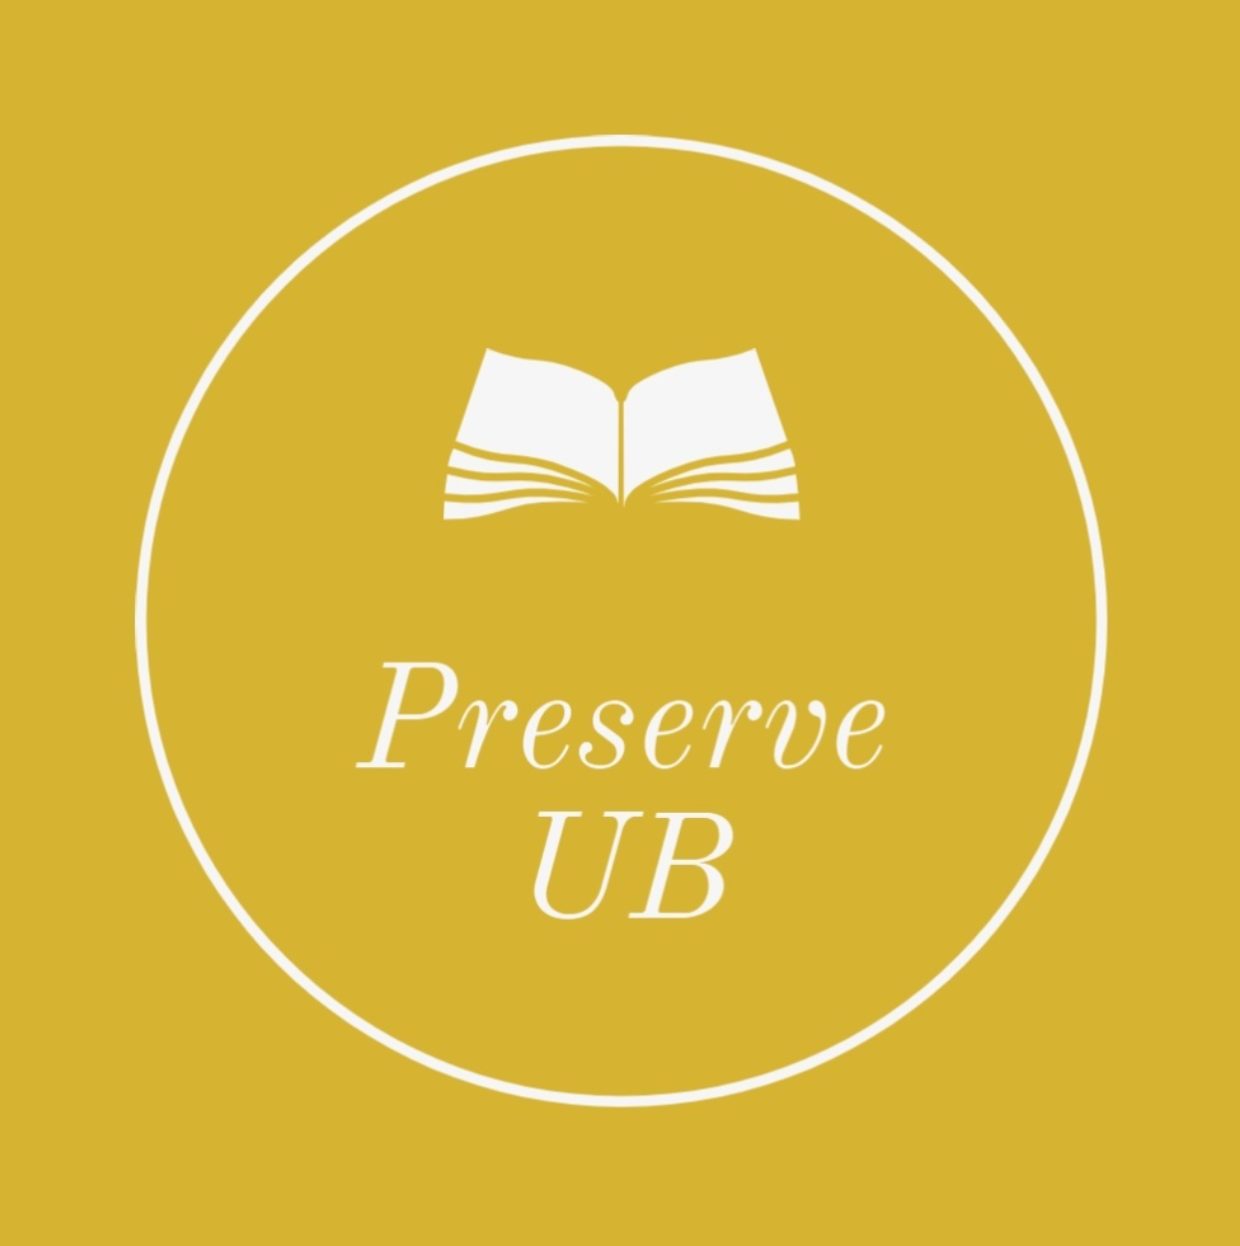 Preserve UB logo